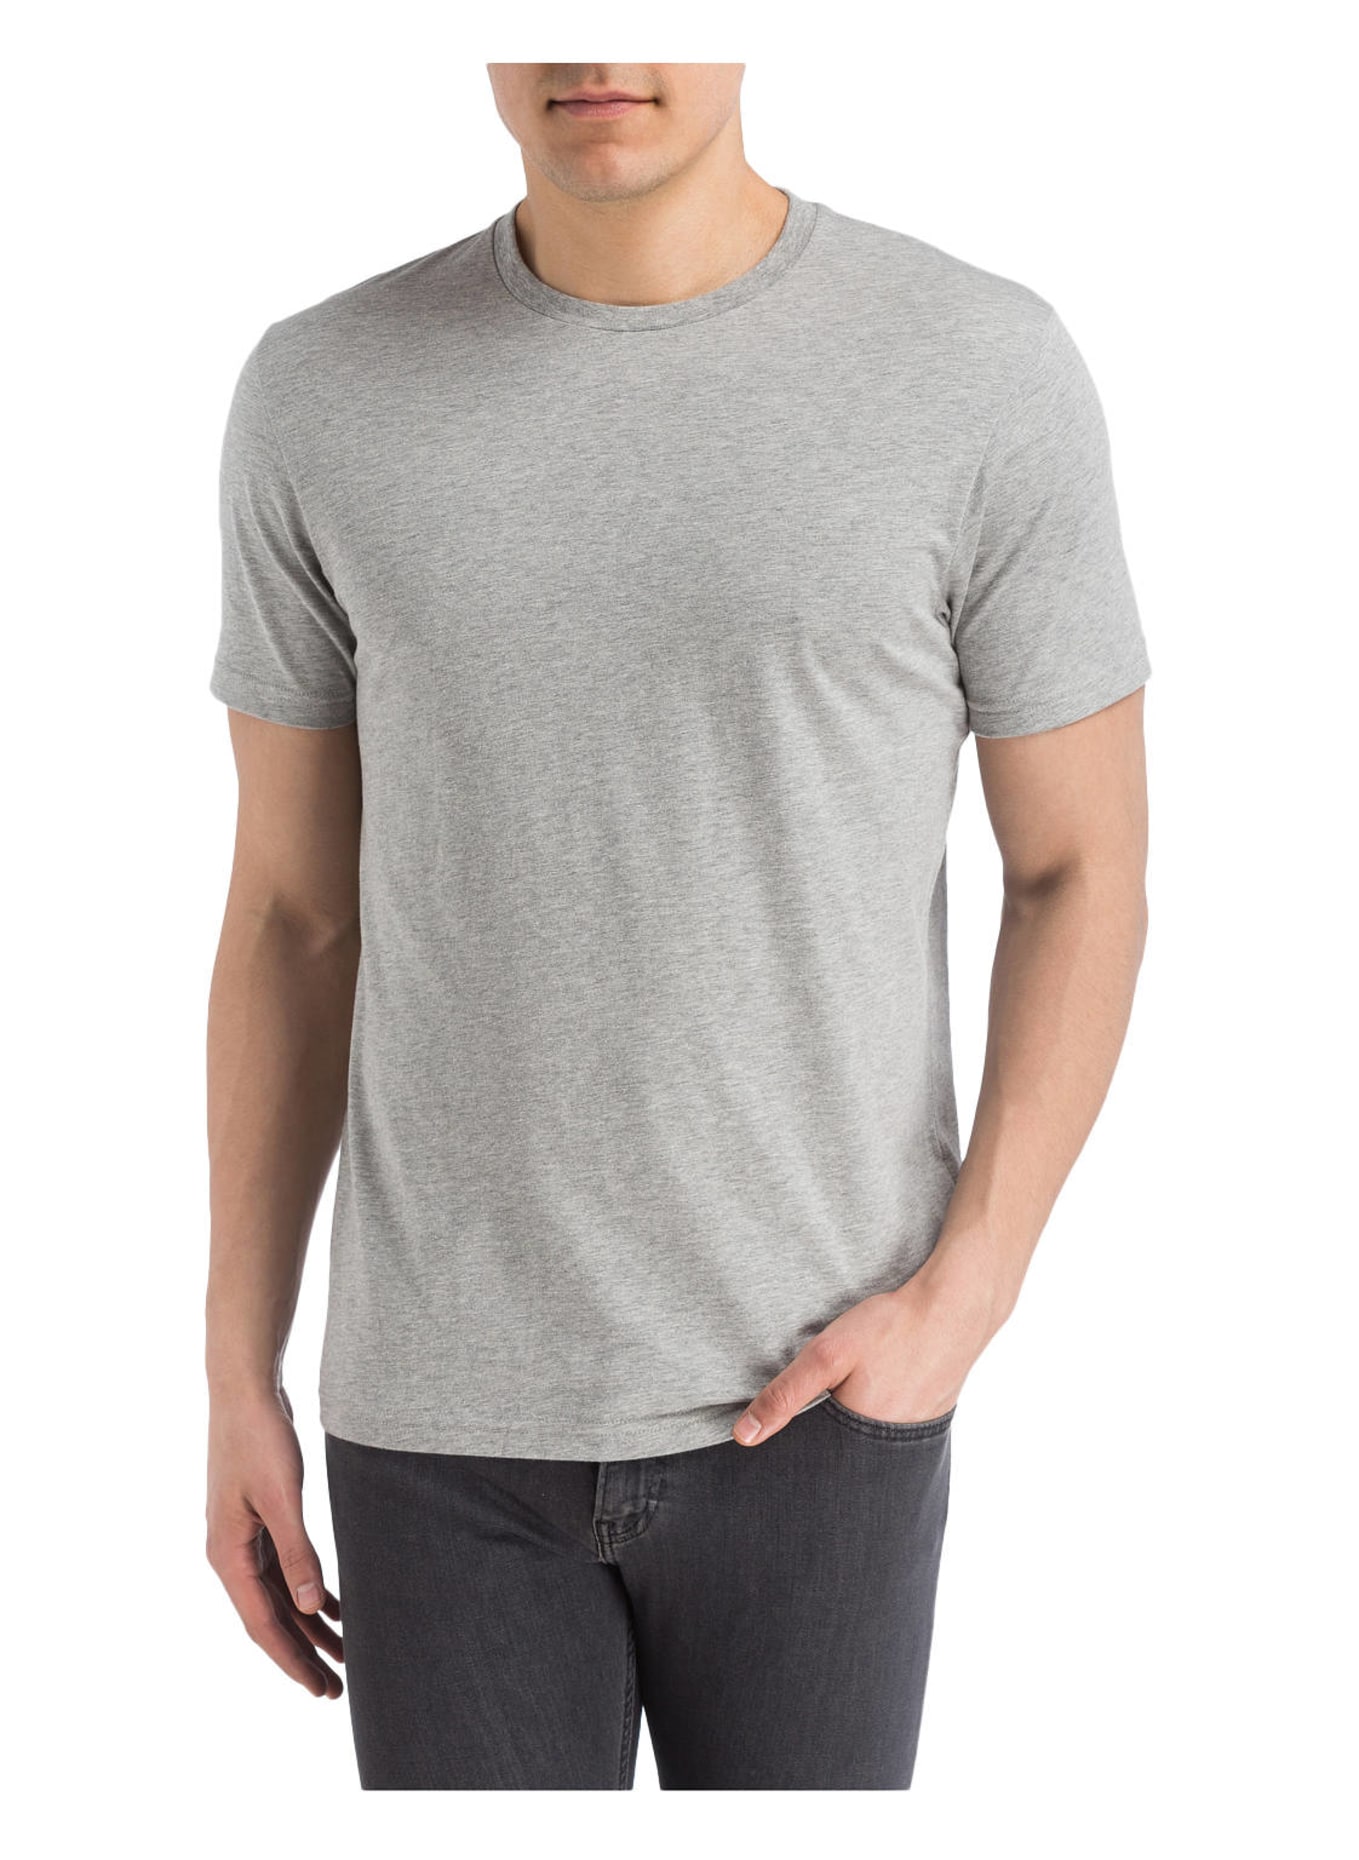 RAGMAN T-shirt regular fit mélange in gray